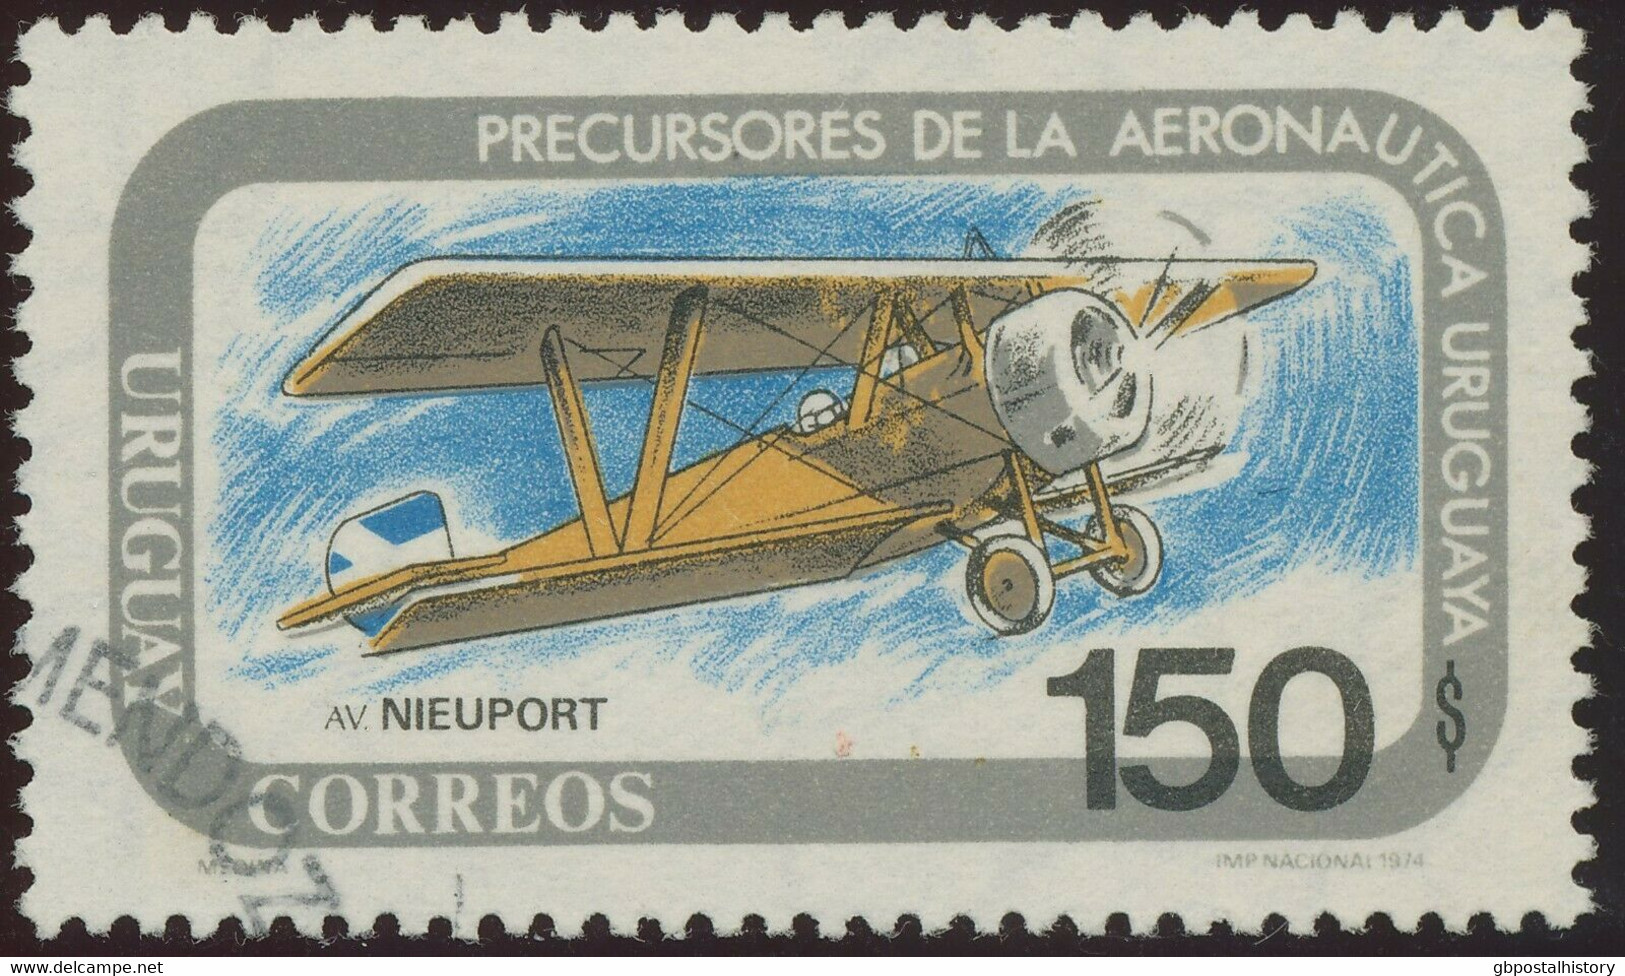 URUGUAY 1974 Pioneers Of Flying 150 P. Nieuport VFU MAJOR VARIETY MISSING COLOR - Uruguay